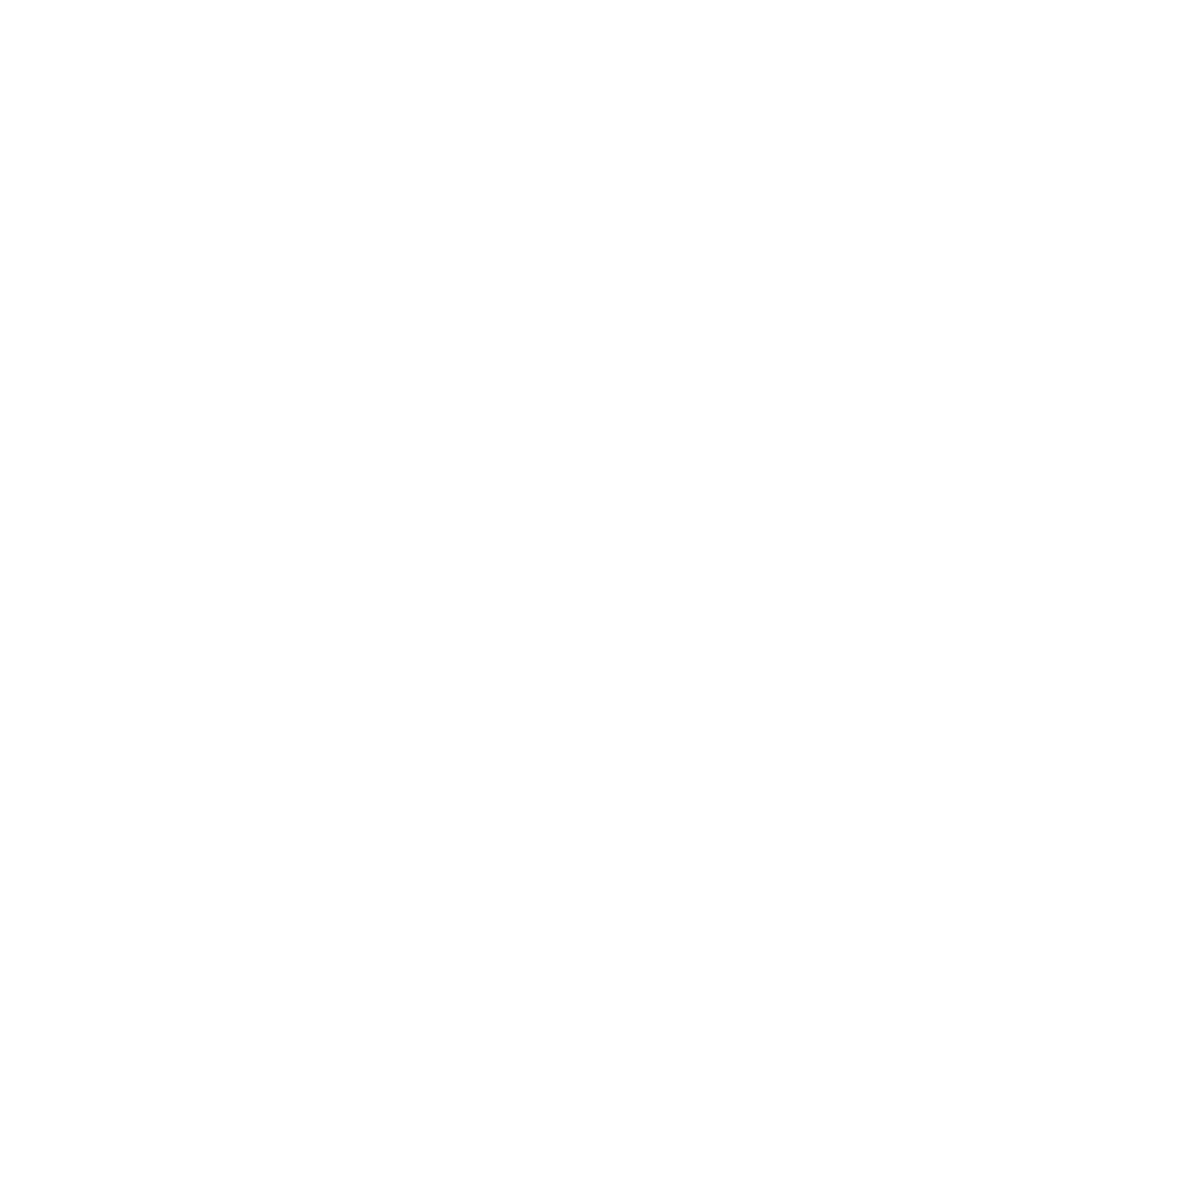 Stovax